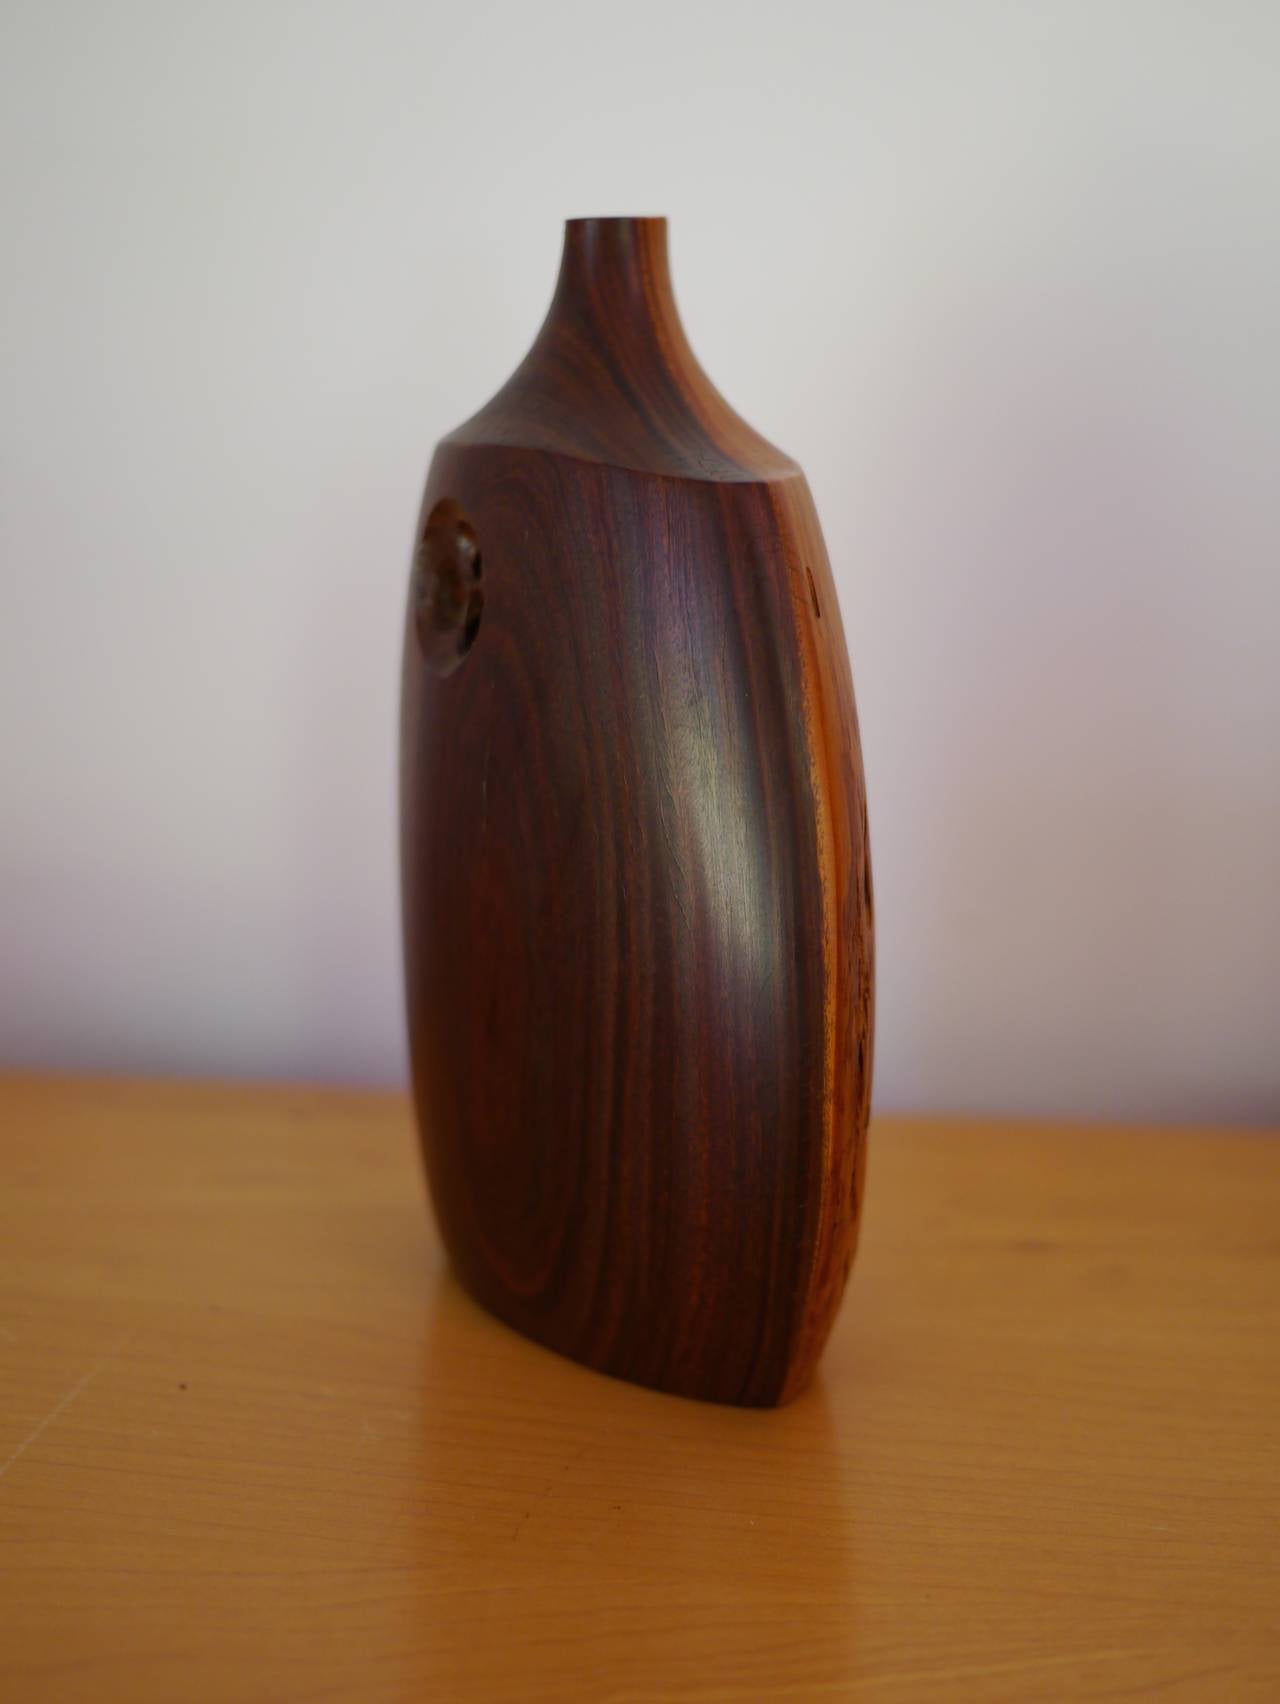 Carved Lignum Vitae vase by Doug Ayers. Signed Doug Ayers, labeled Lignum Vitae.